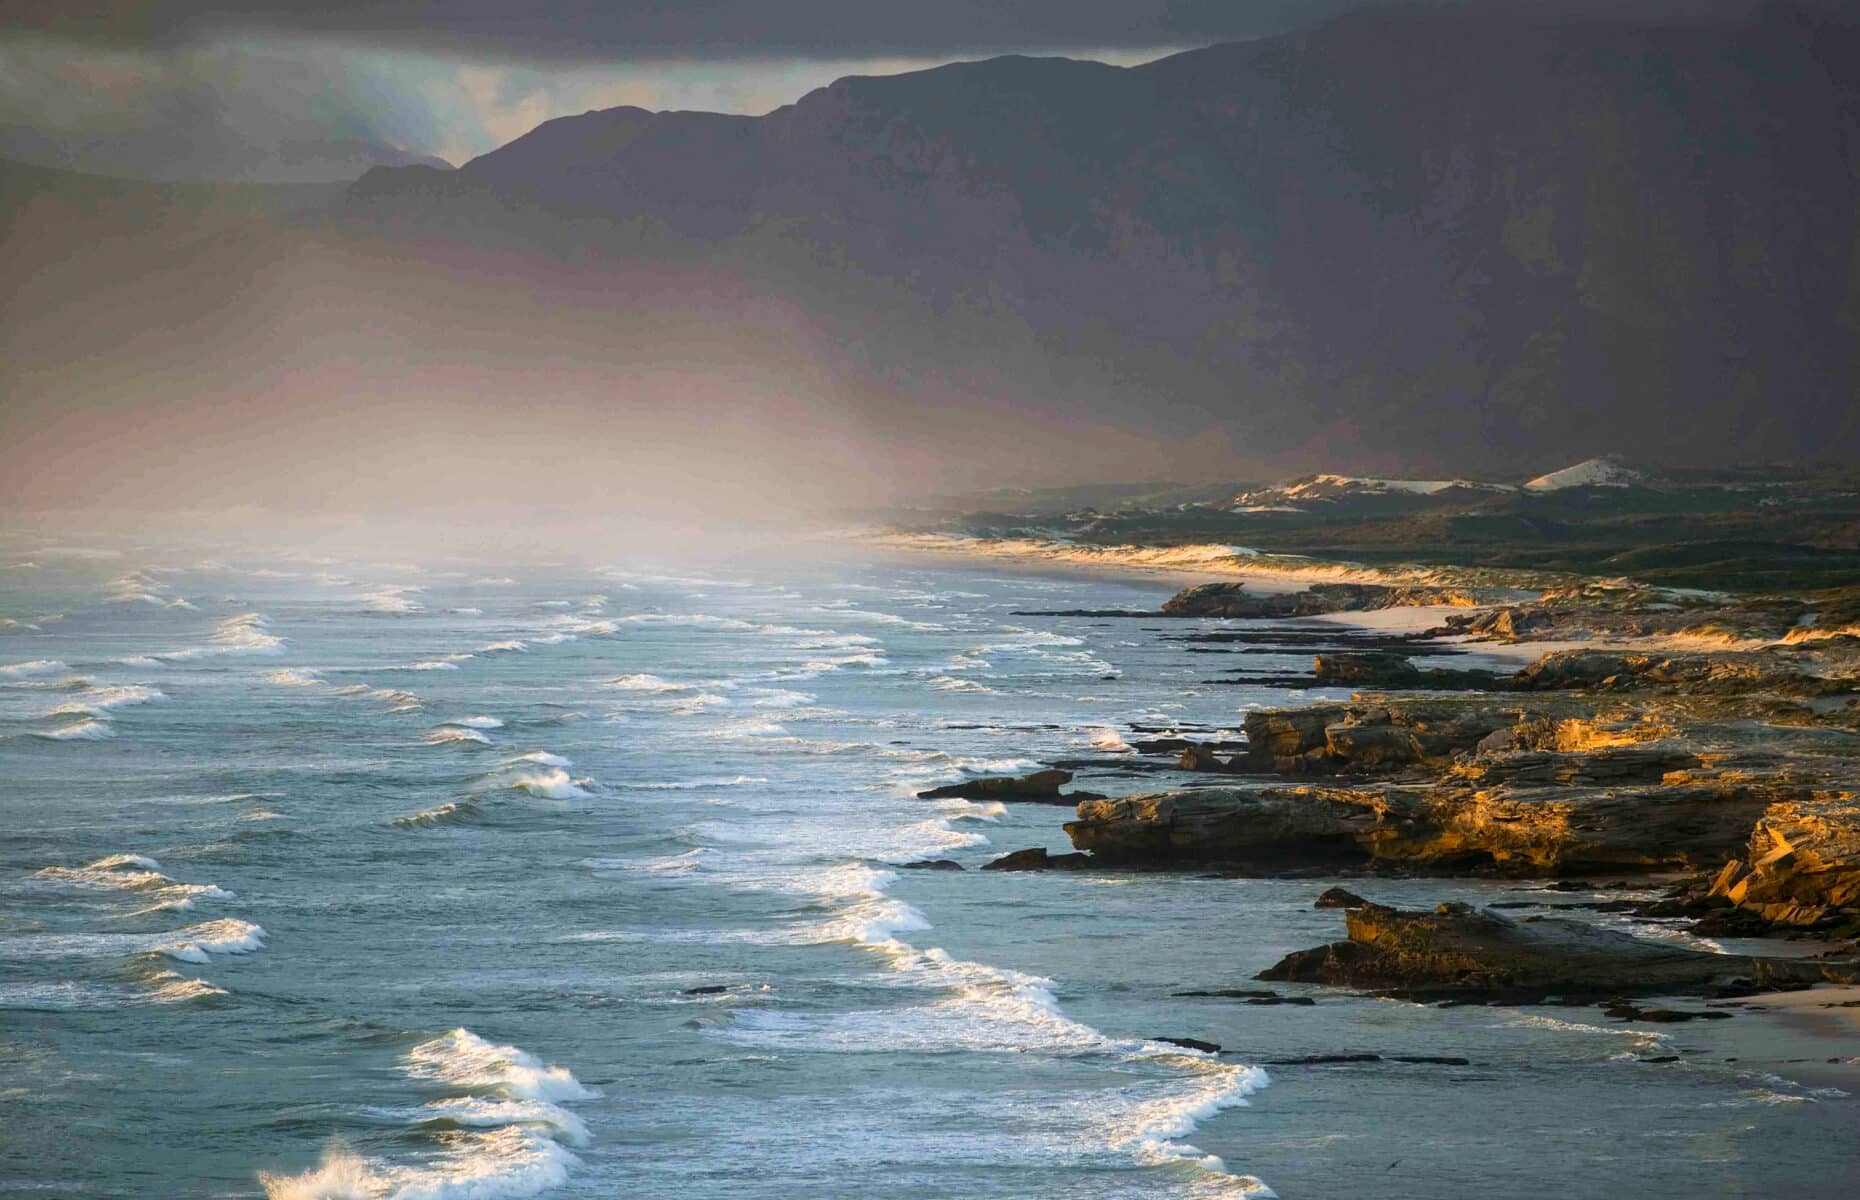 Coastline South Africa View along the coastline near De Kelders, South Africa.